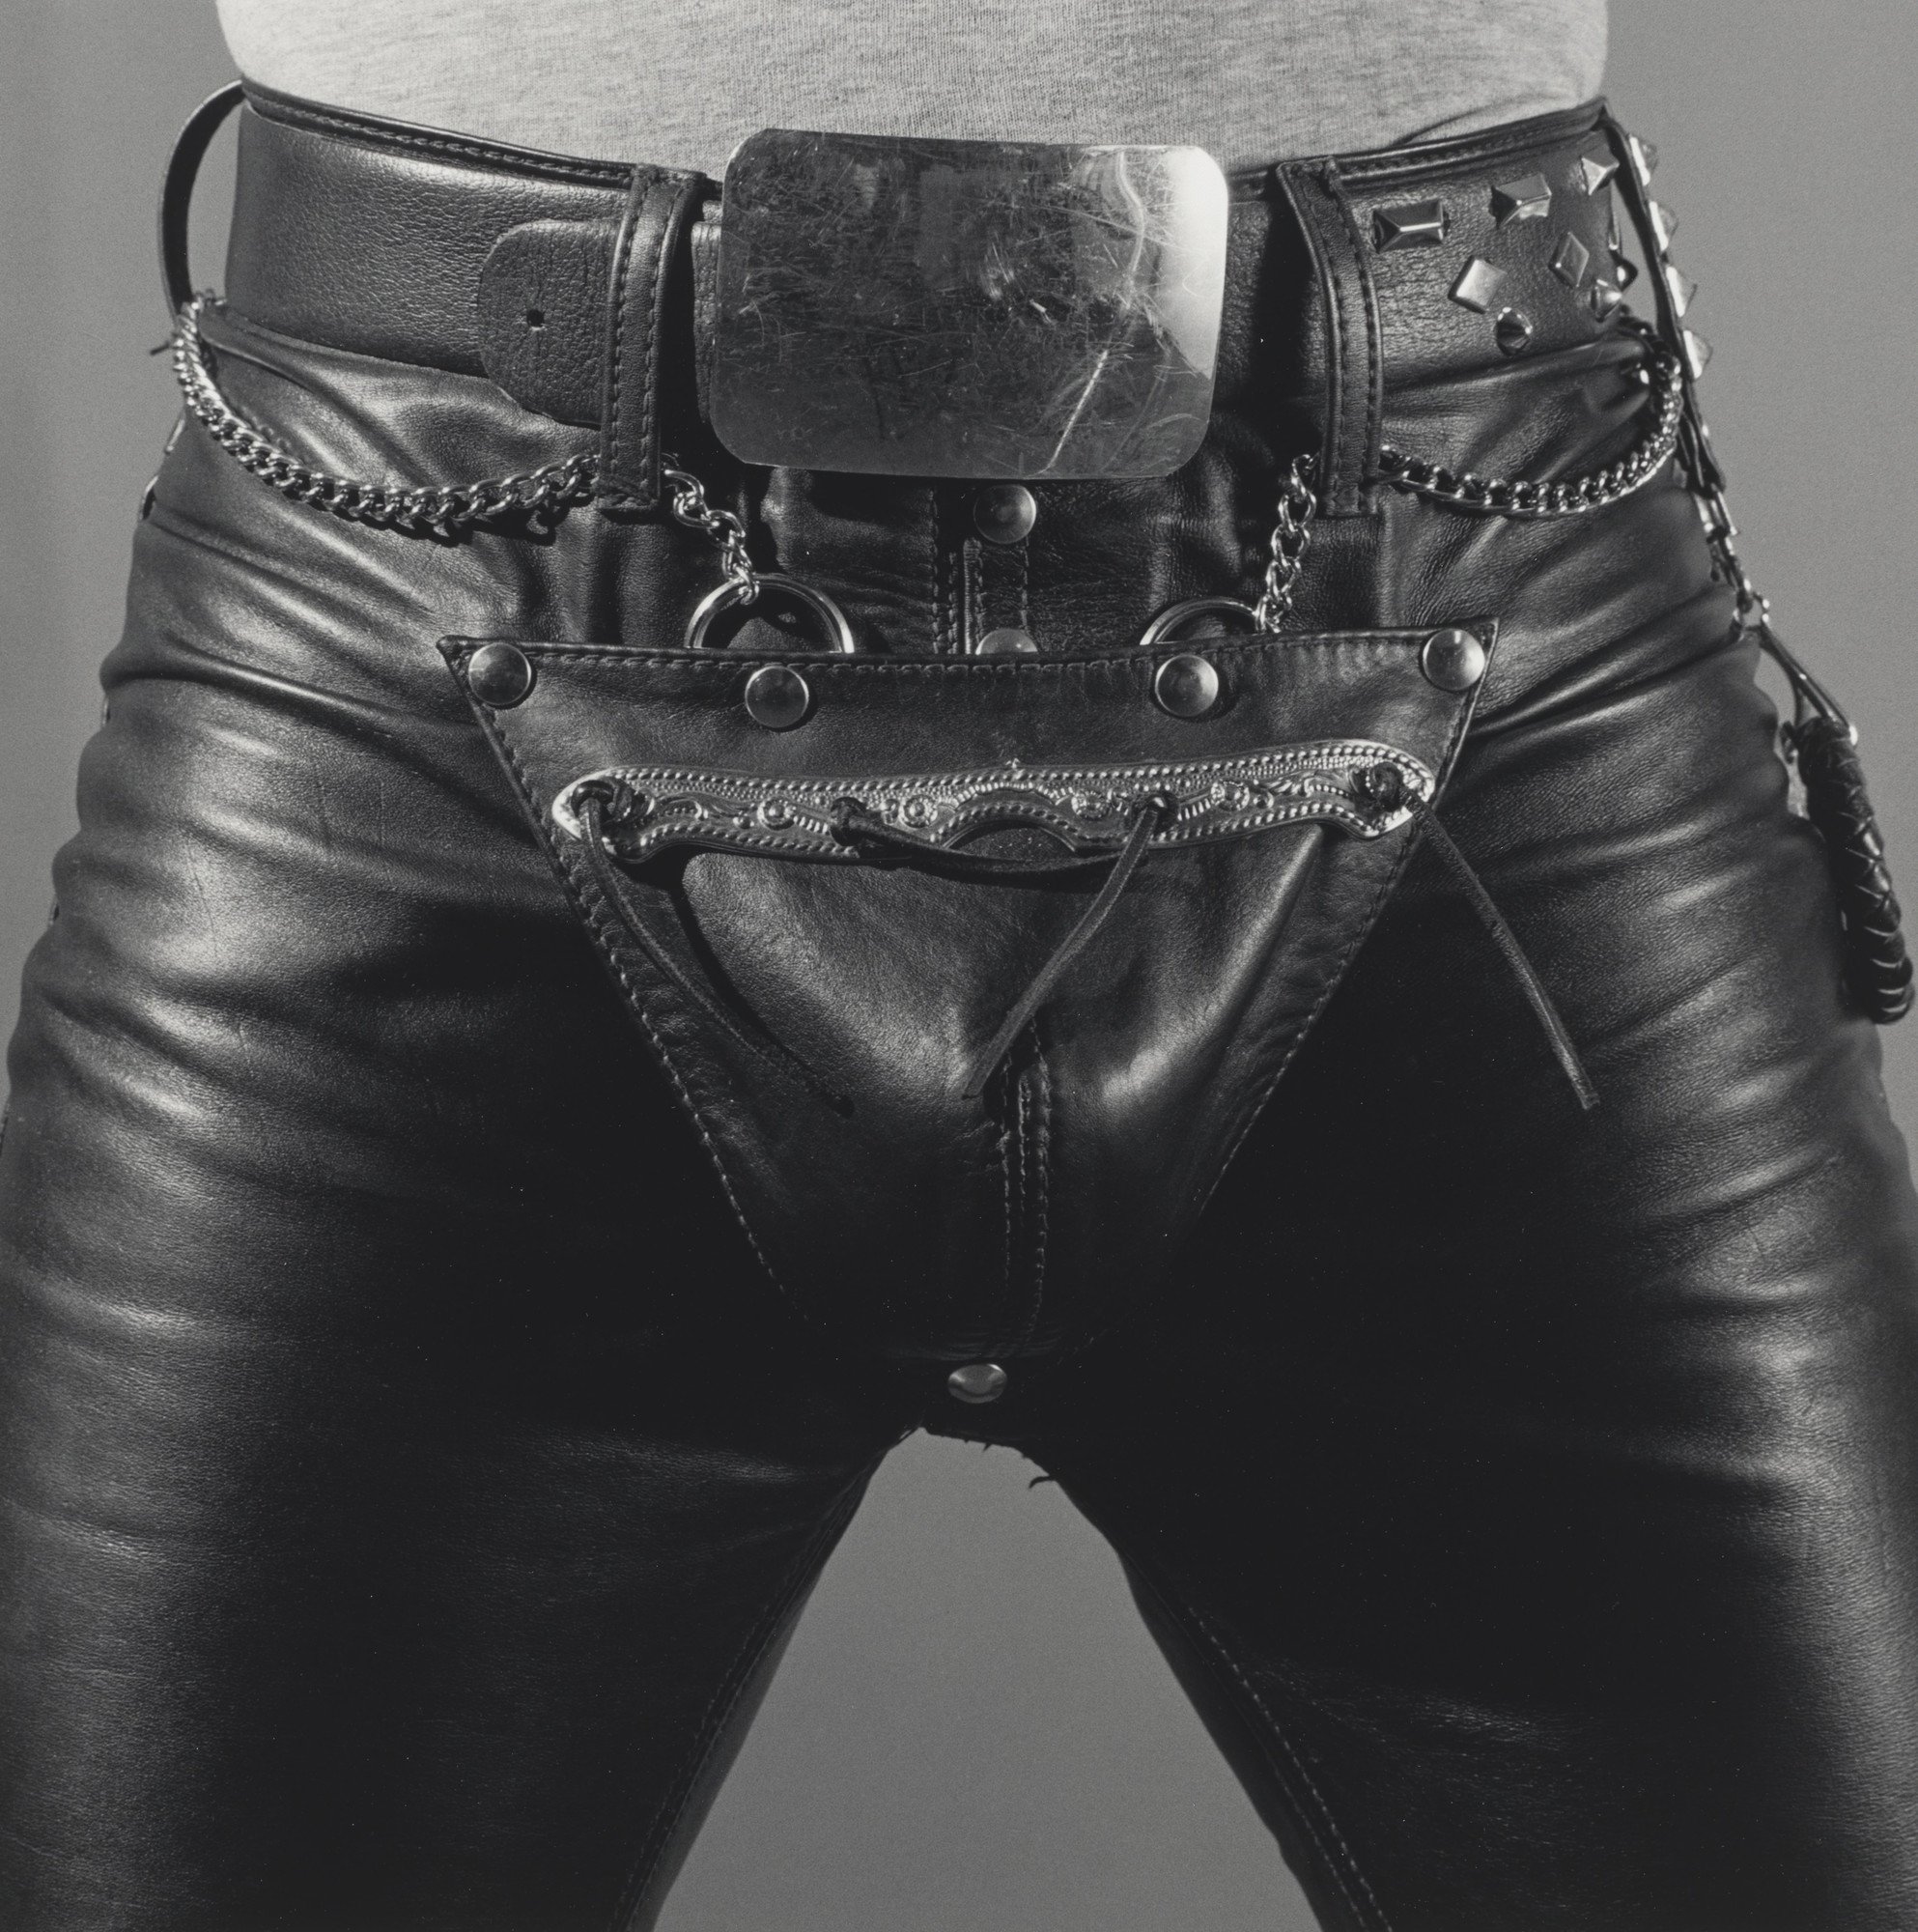 Robert Mapplethorpe Leather Crotch.jpeg